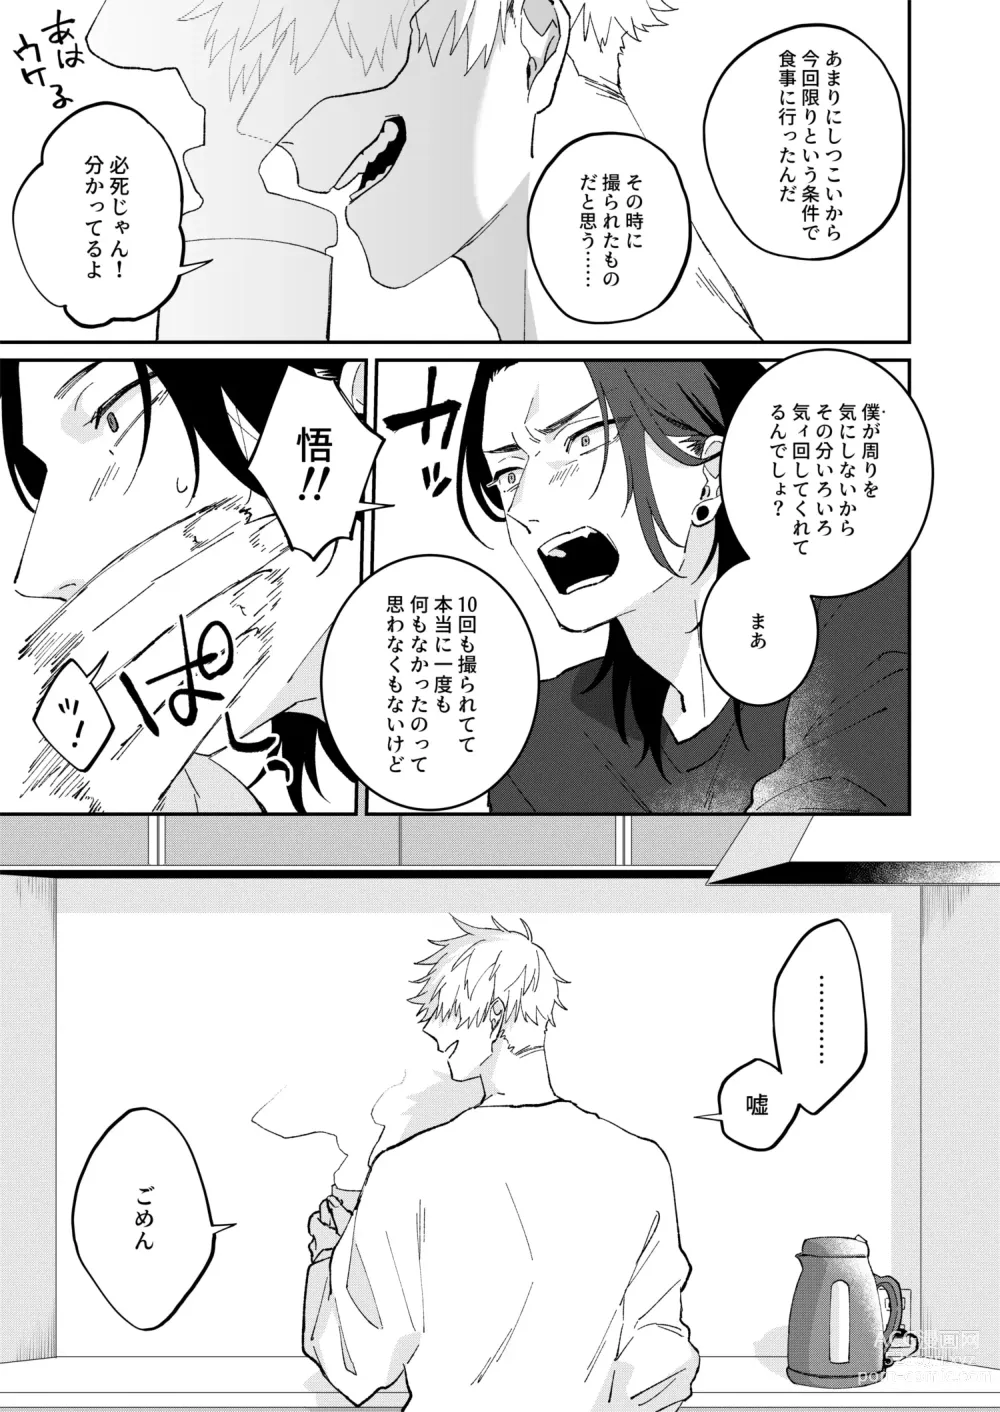 Page 5 of doujinshi GeGo wa Genjitsu nanode Scandal NG desu!!!